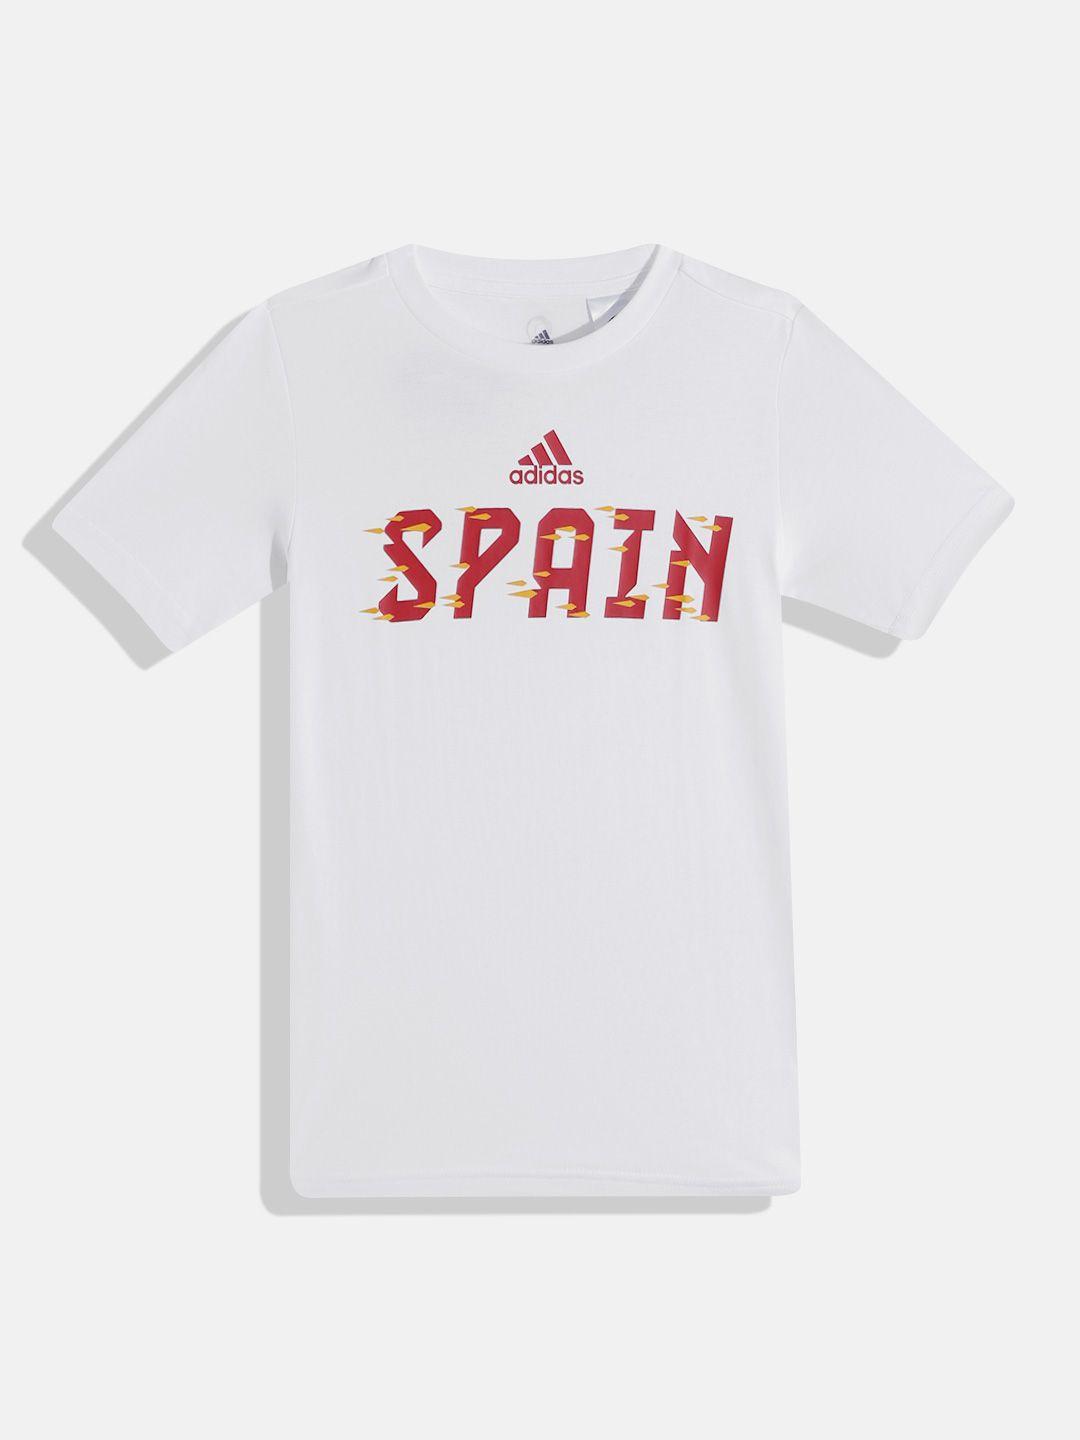 adidas unisex kids white & red brand logo print hd6374 t-shirt